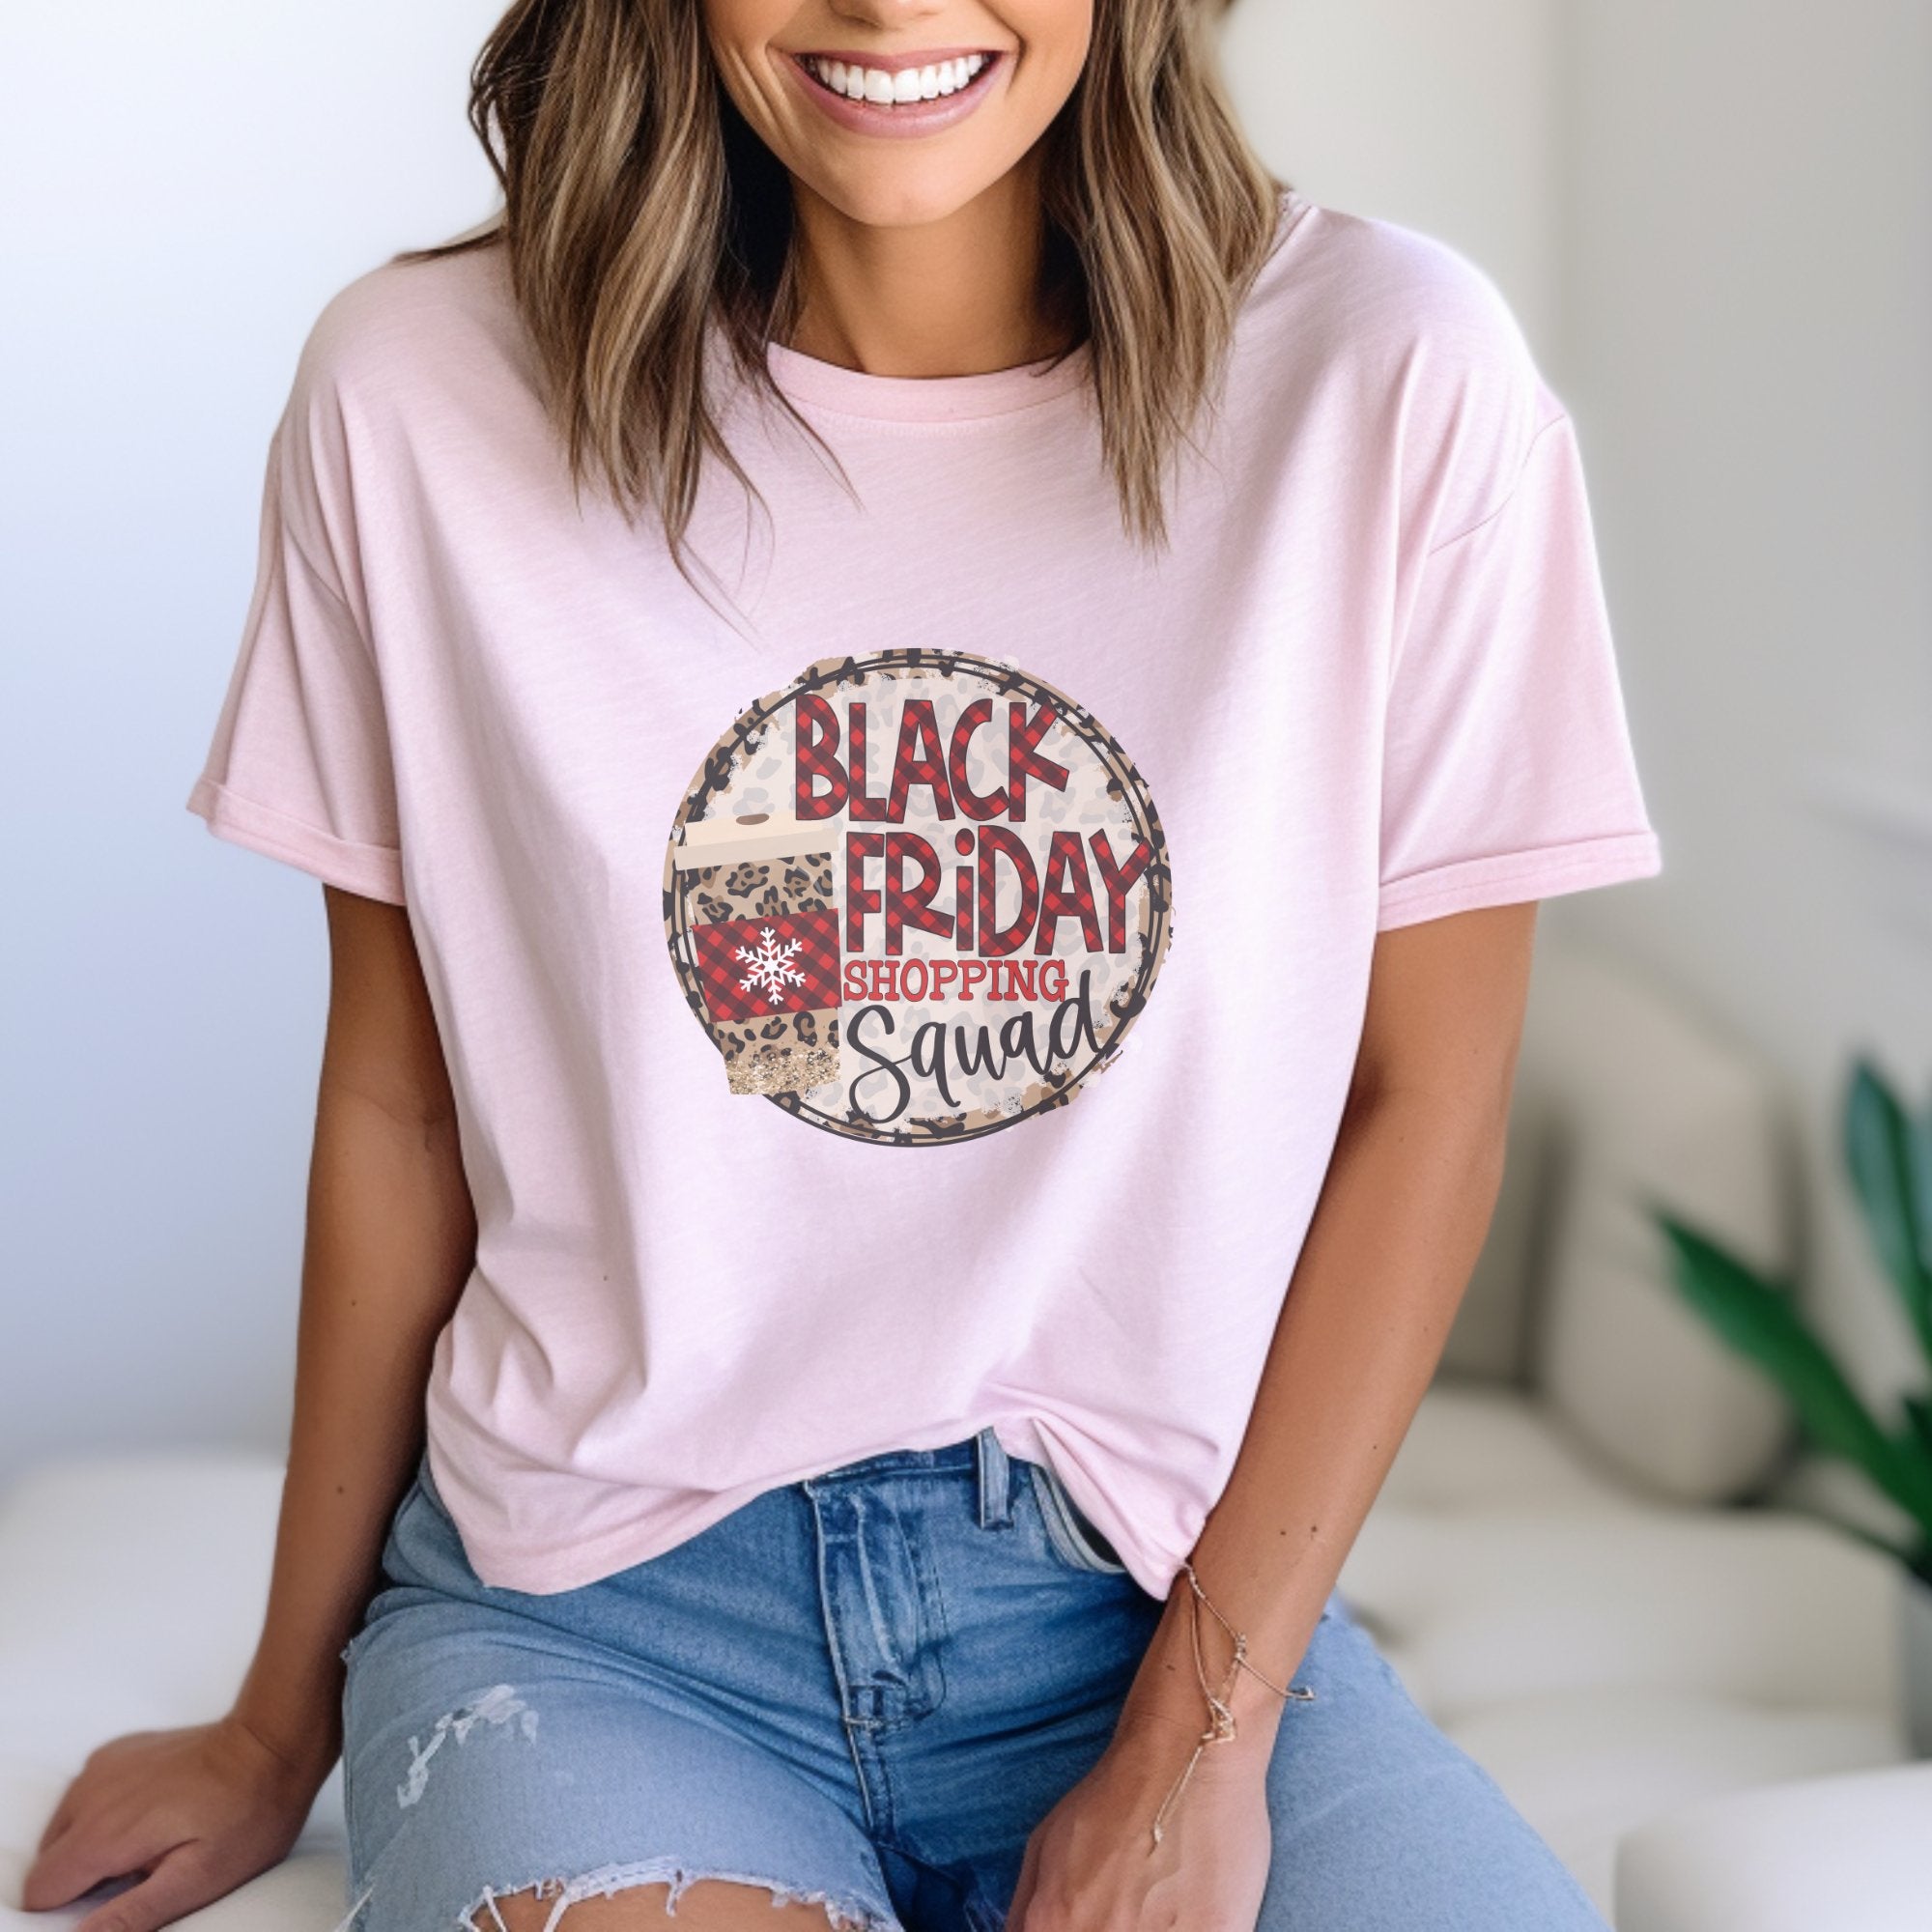 Black Friday Shopping Squad T-Shirt - Trendznmore